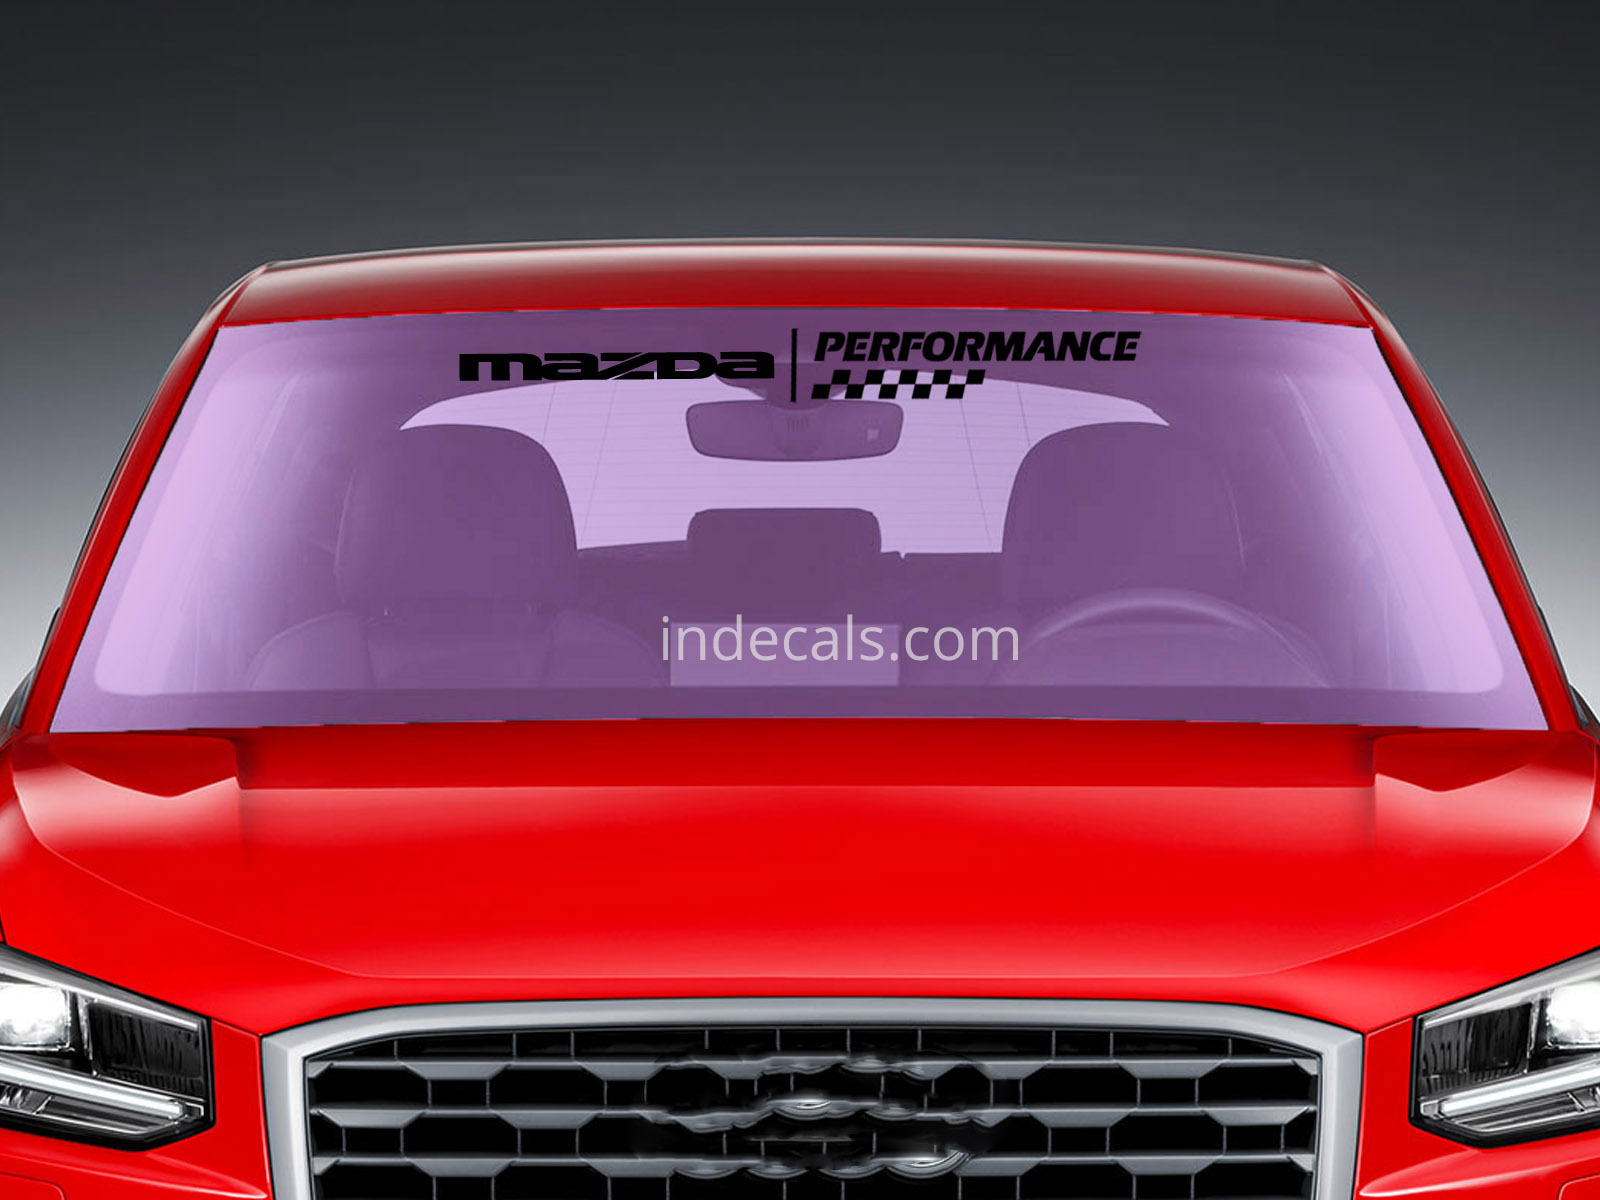 1 x Mazda Performance Sticker for Windshield or Back Window - Black